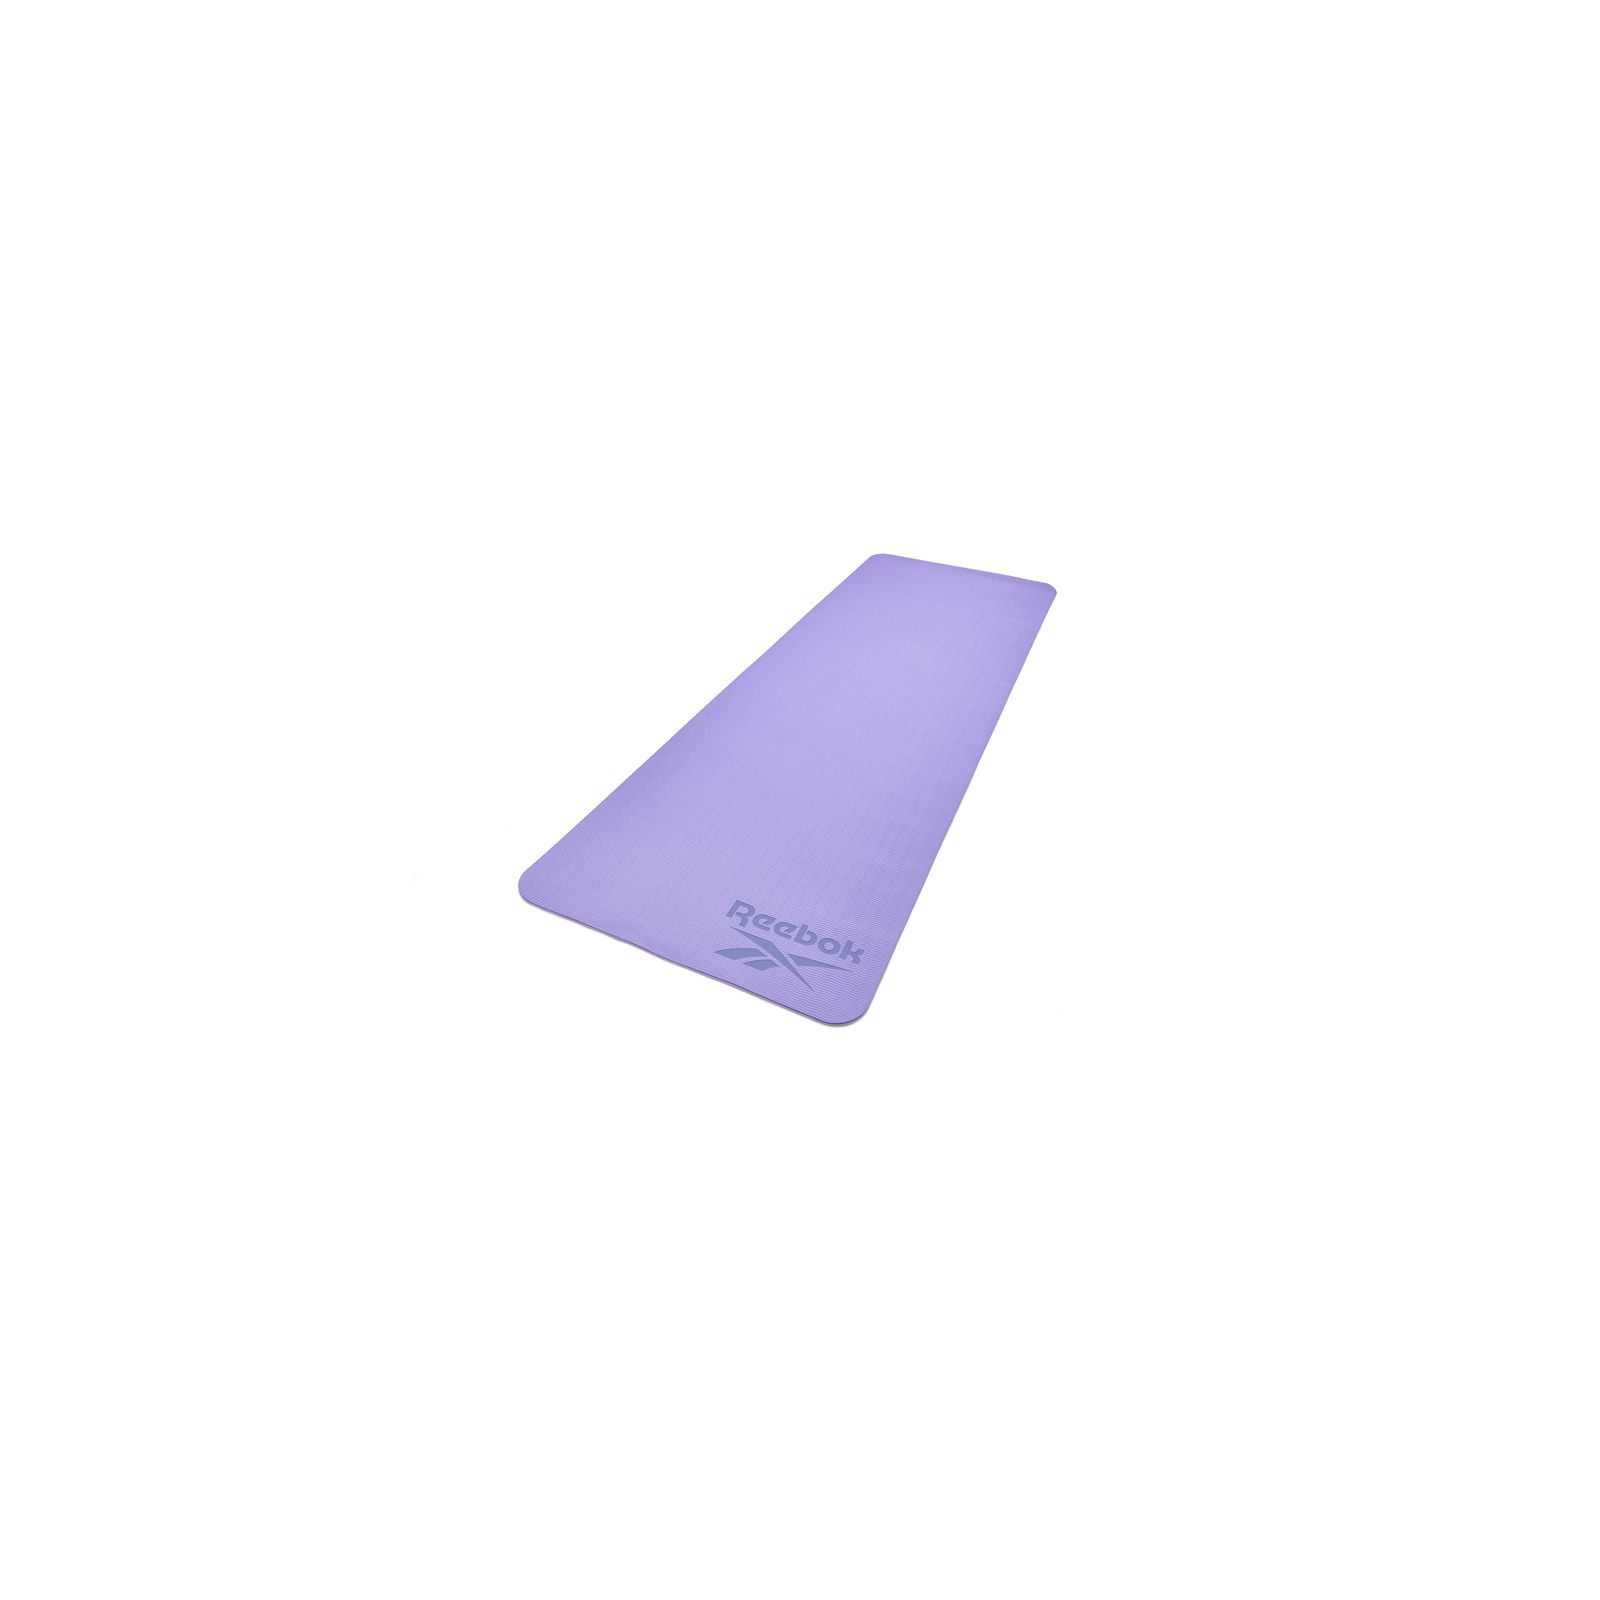 Коврик для йоги Reebok Double Sided Yoga Mat червоний RAYG-11042RD (885652020855) изображение 3